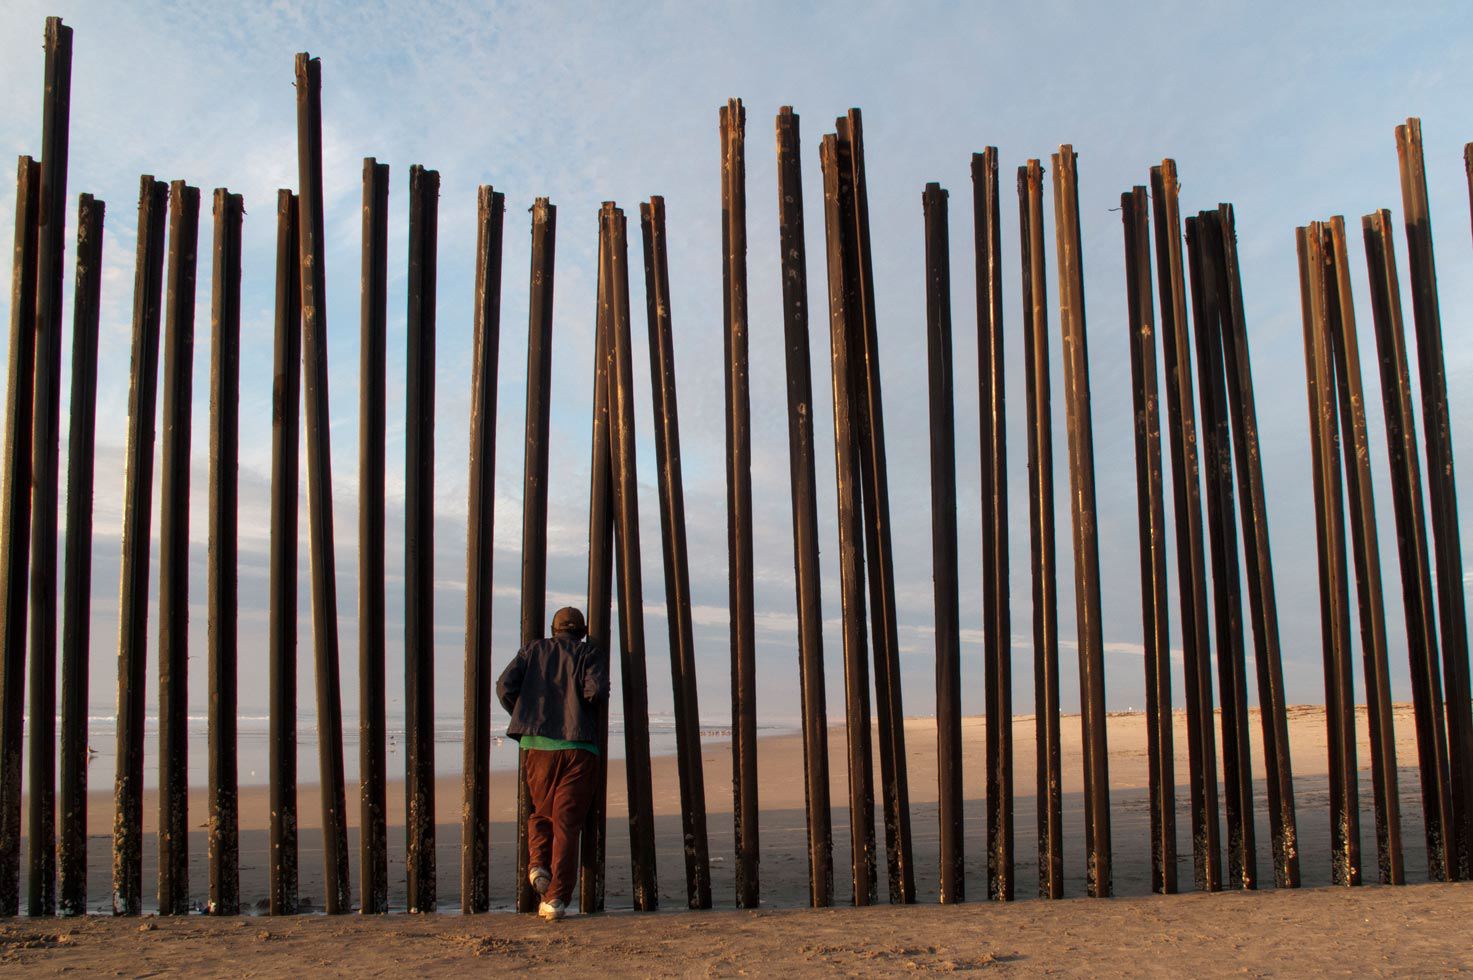 Stefan Falke: La Frontera
Artists creating on the perimeter

Border fence in Playa Tijuana